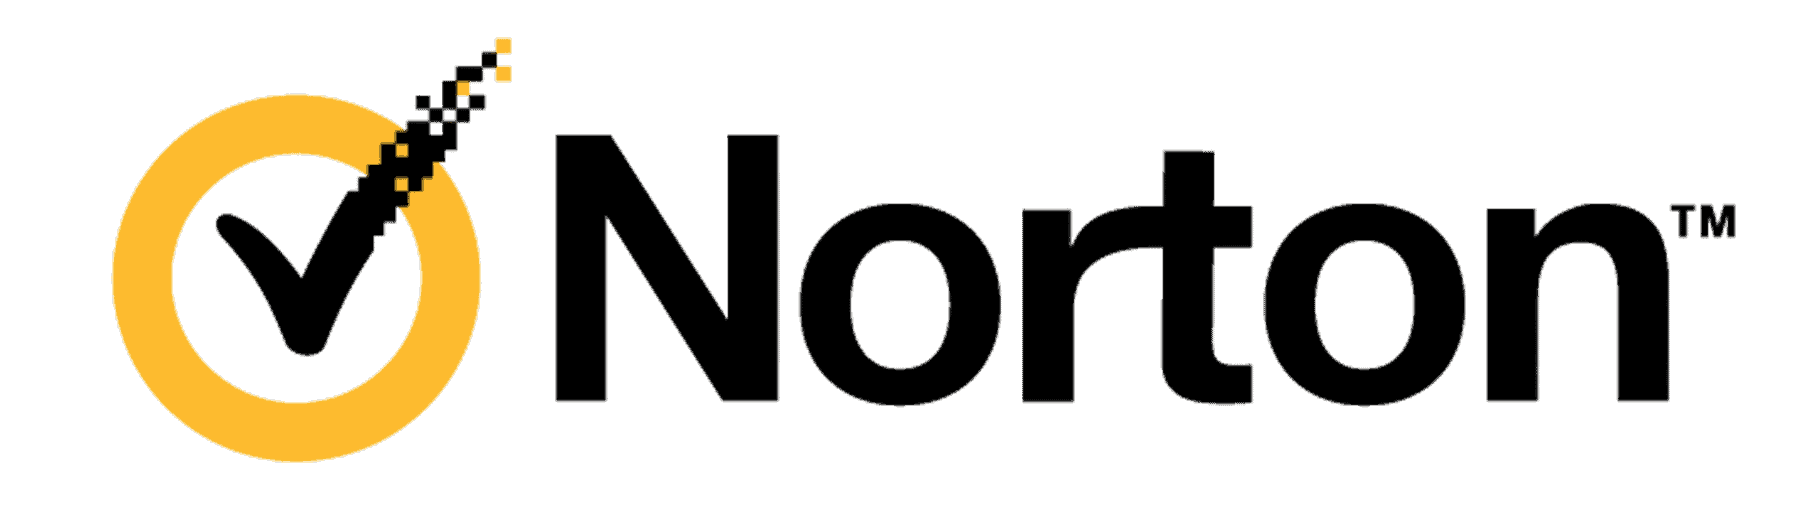 Norton Secure VPN - Product Logo